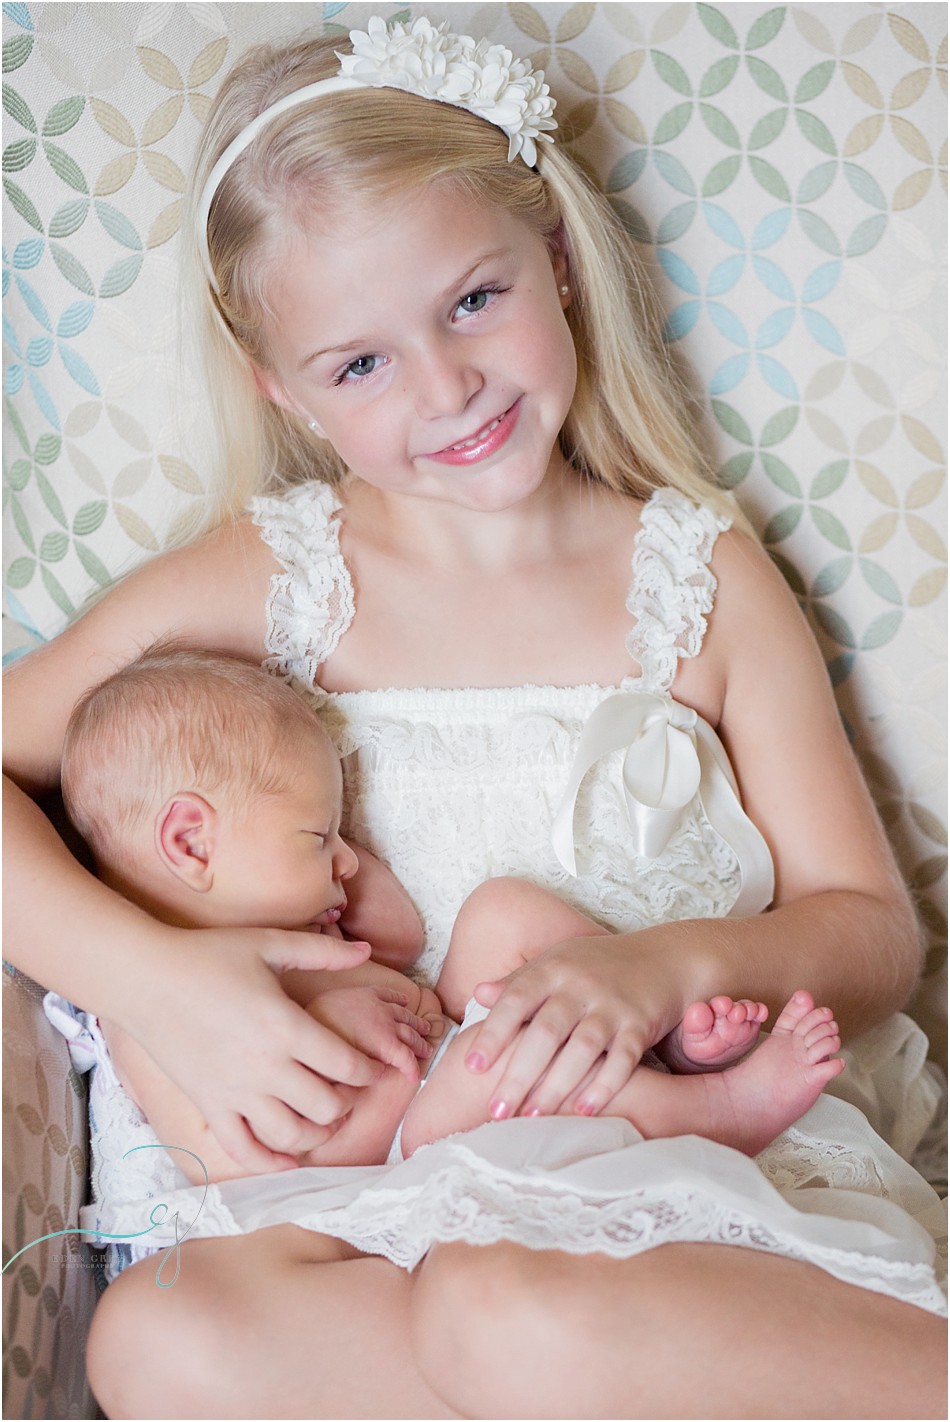 Sister holding her newborn baby brother, Texas newborn photographer